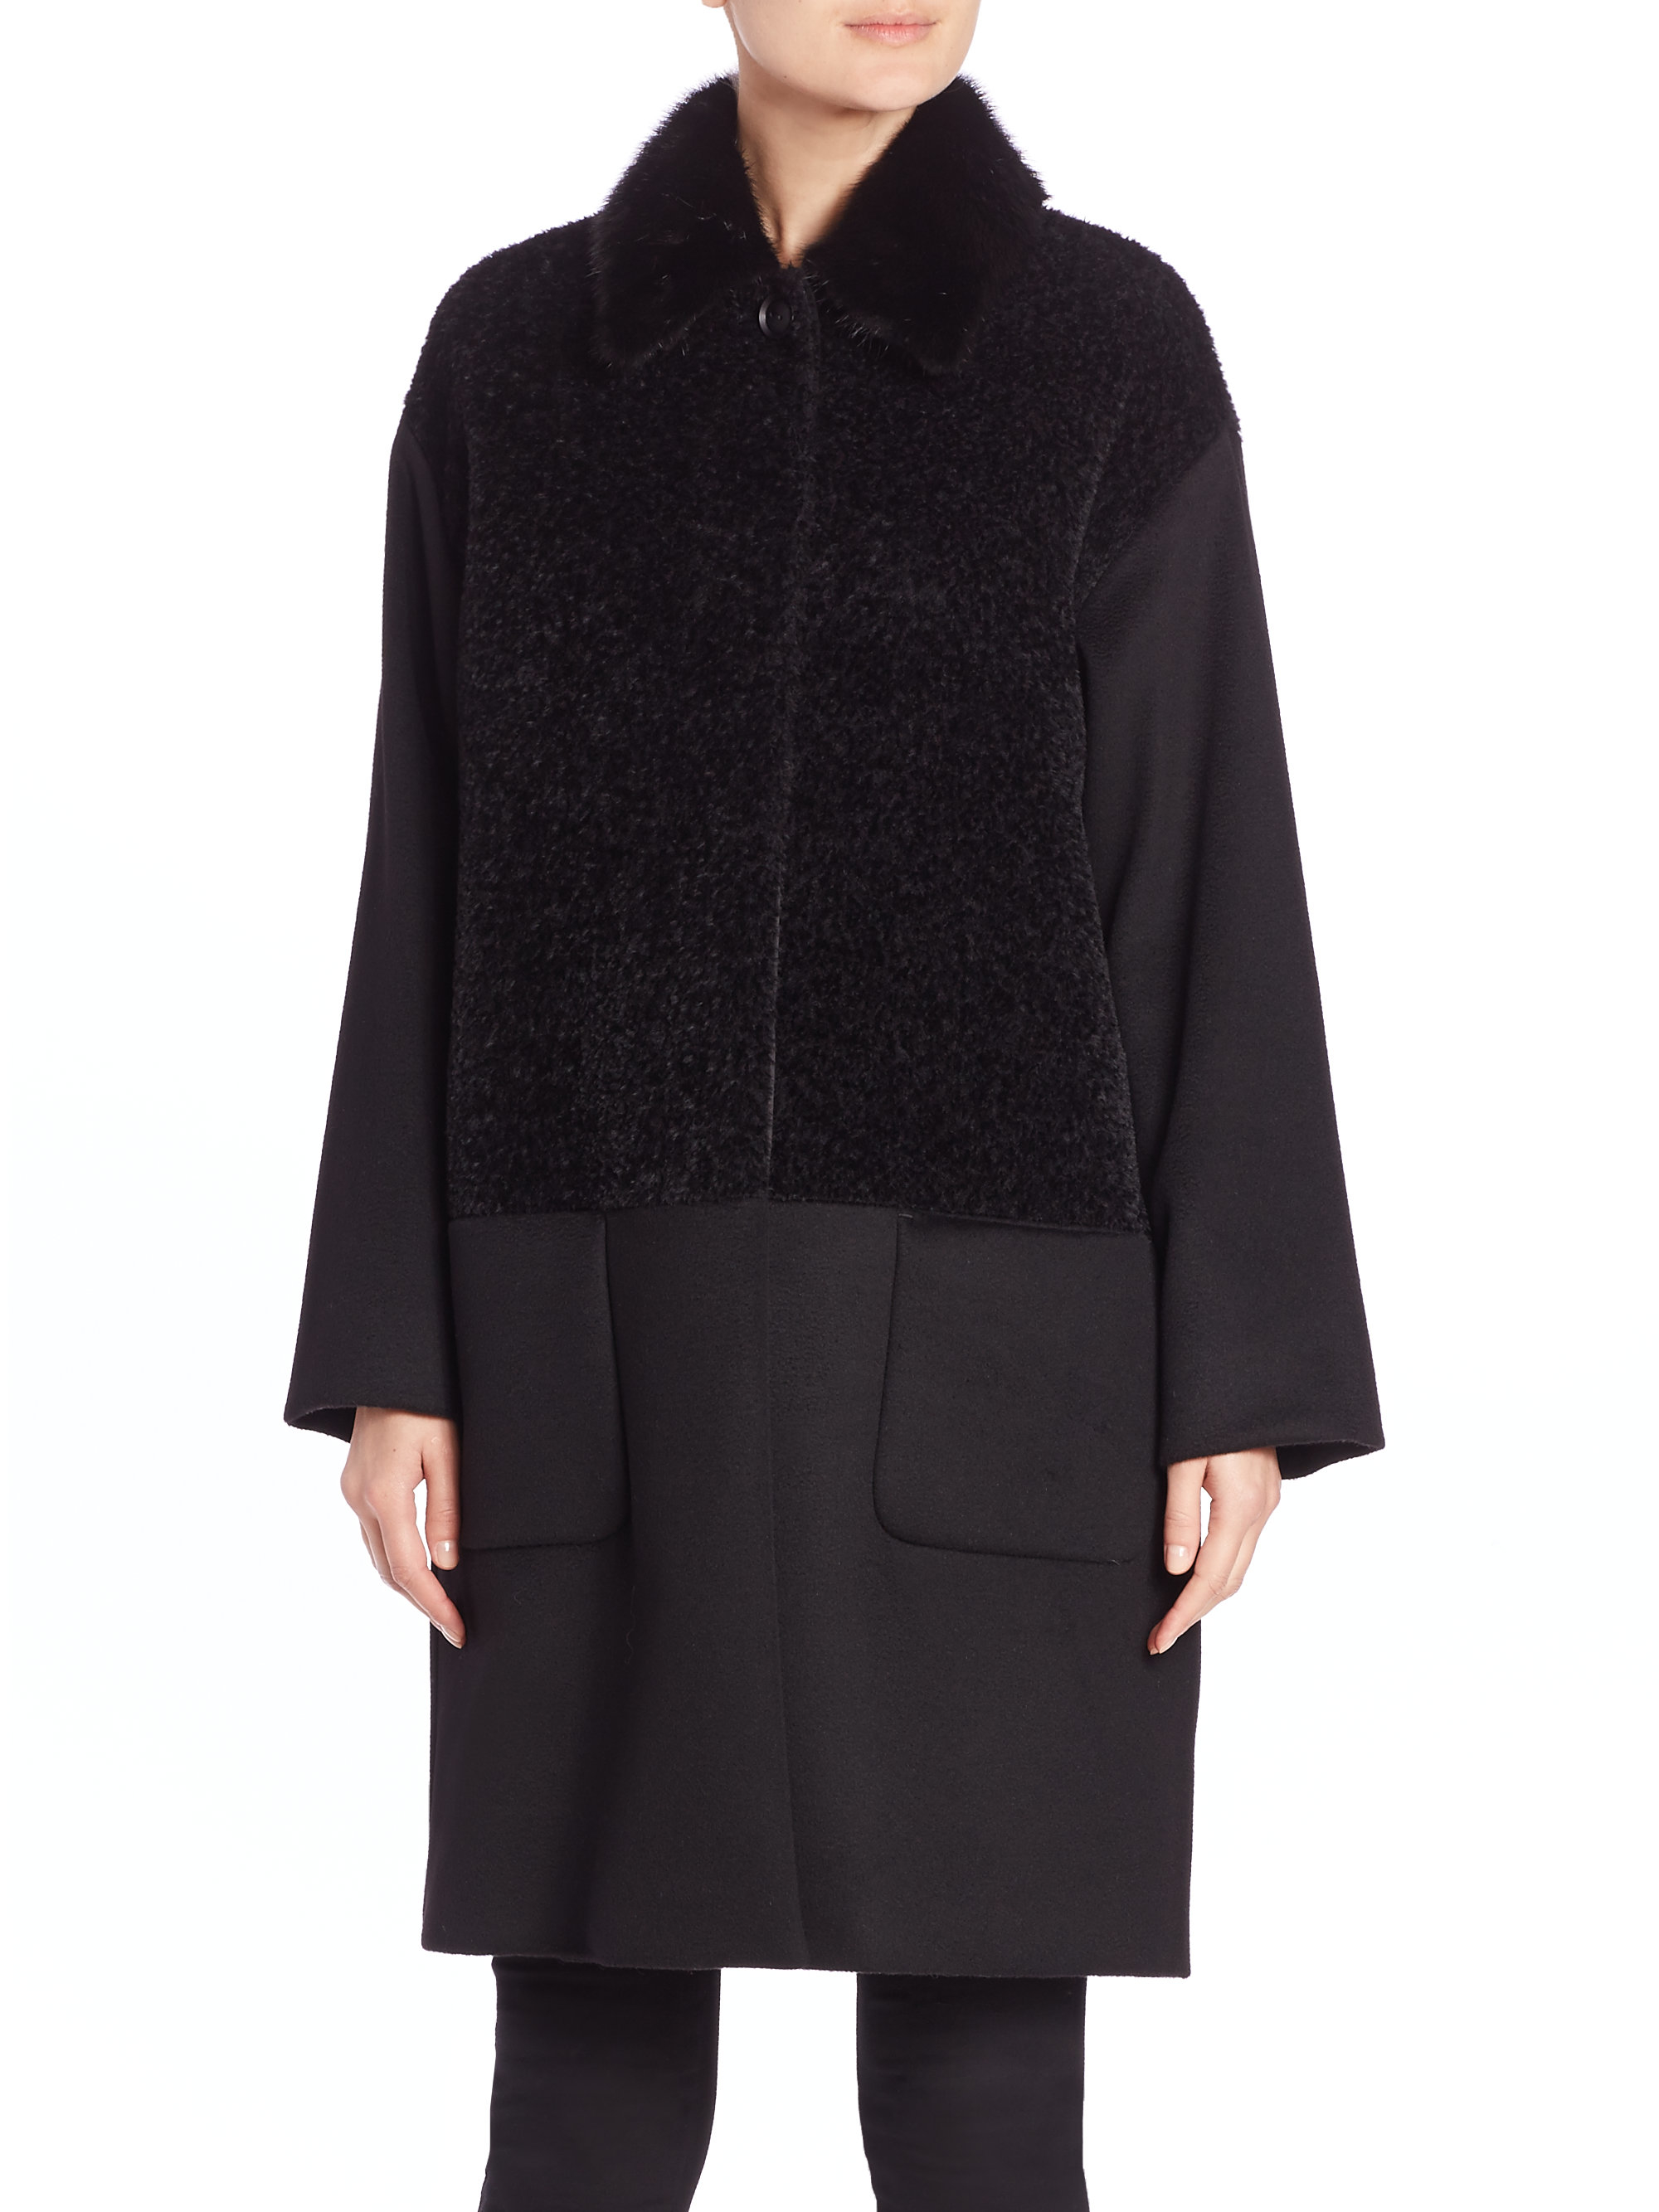 Lyst - Max Mara Studio Corvino Alpaca & Wool Fur-trimmed Coat in Black